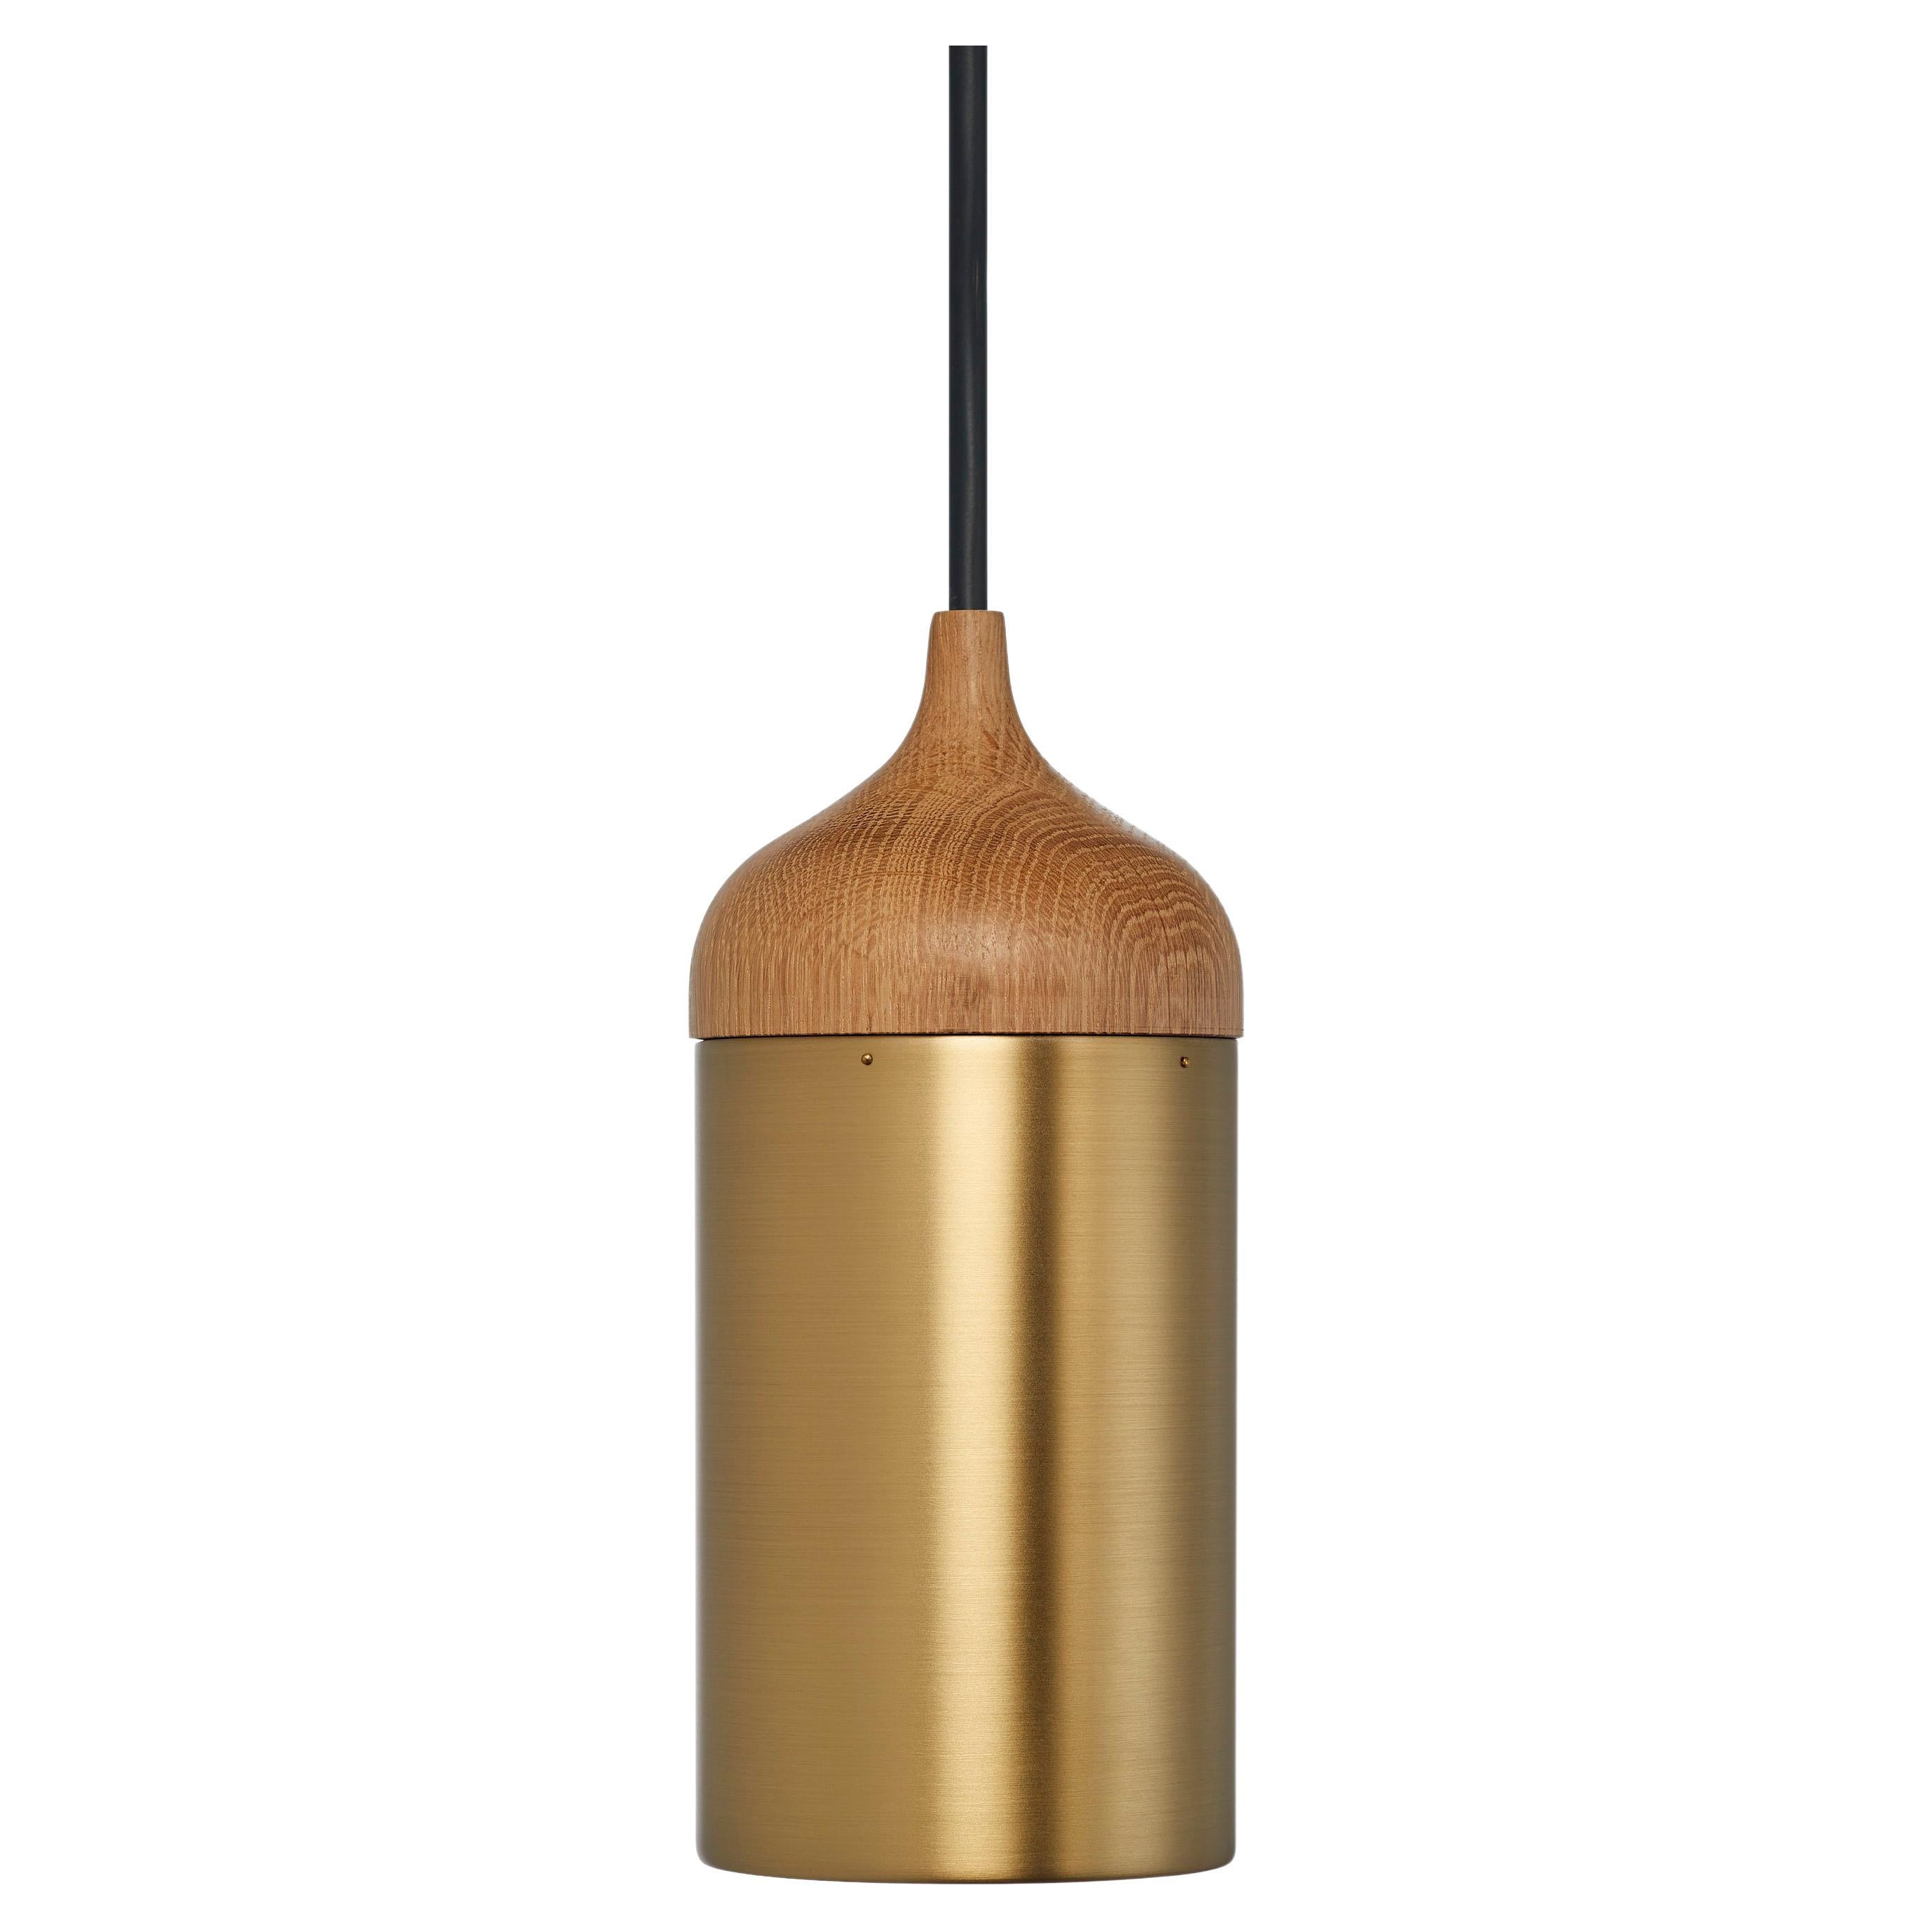 Brass Lamp No.1 - Oak Top For Sale